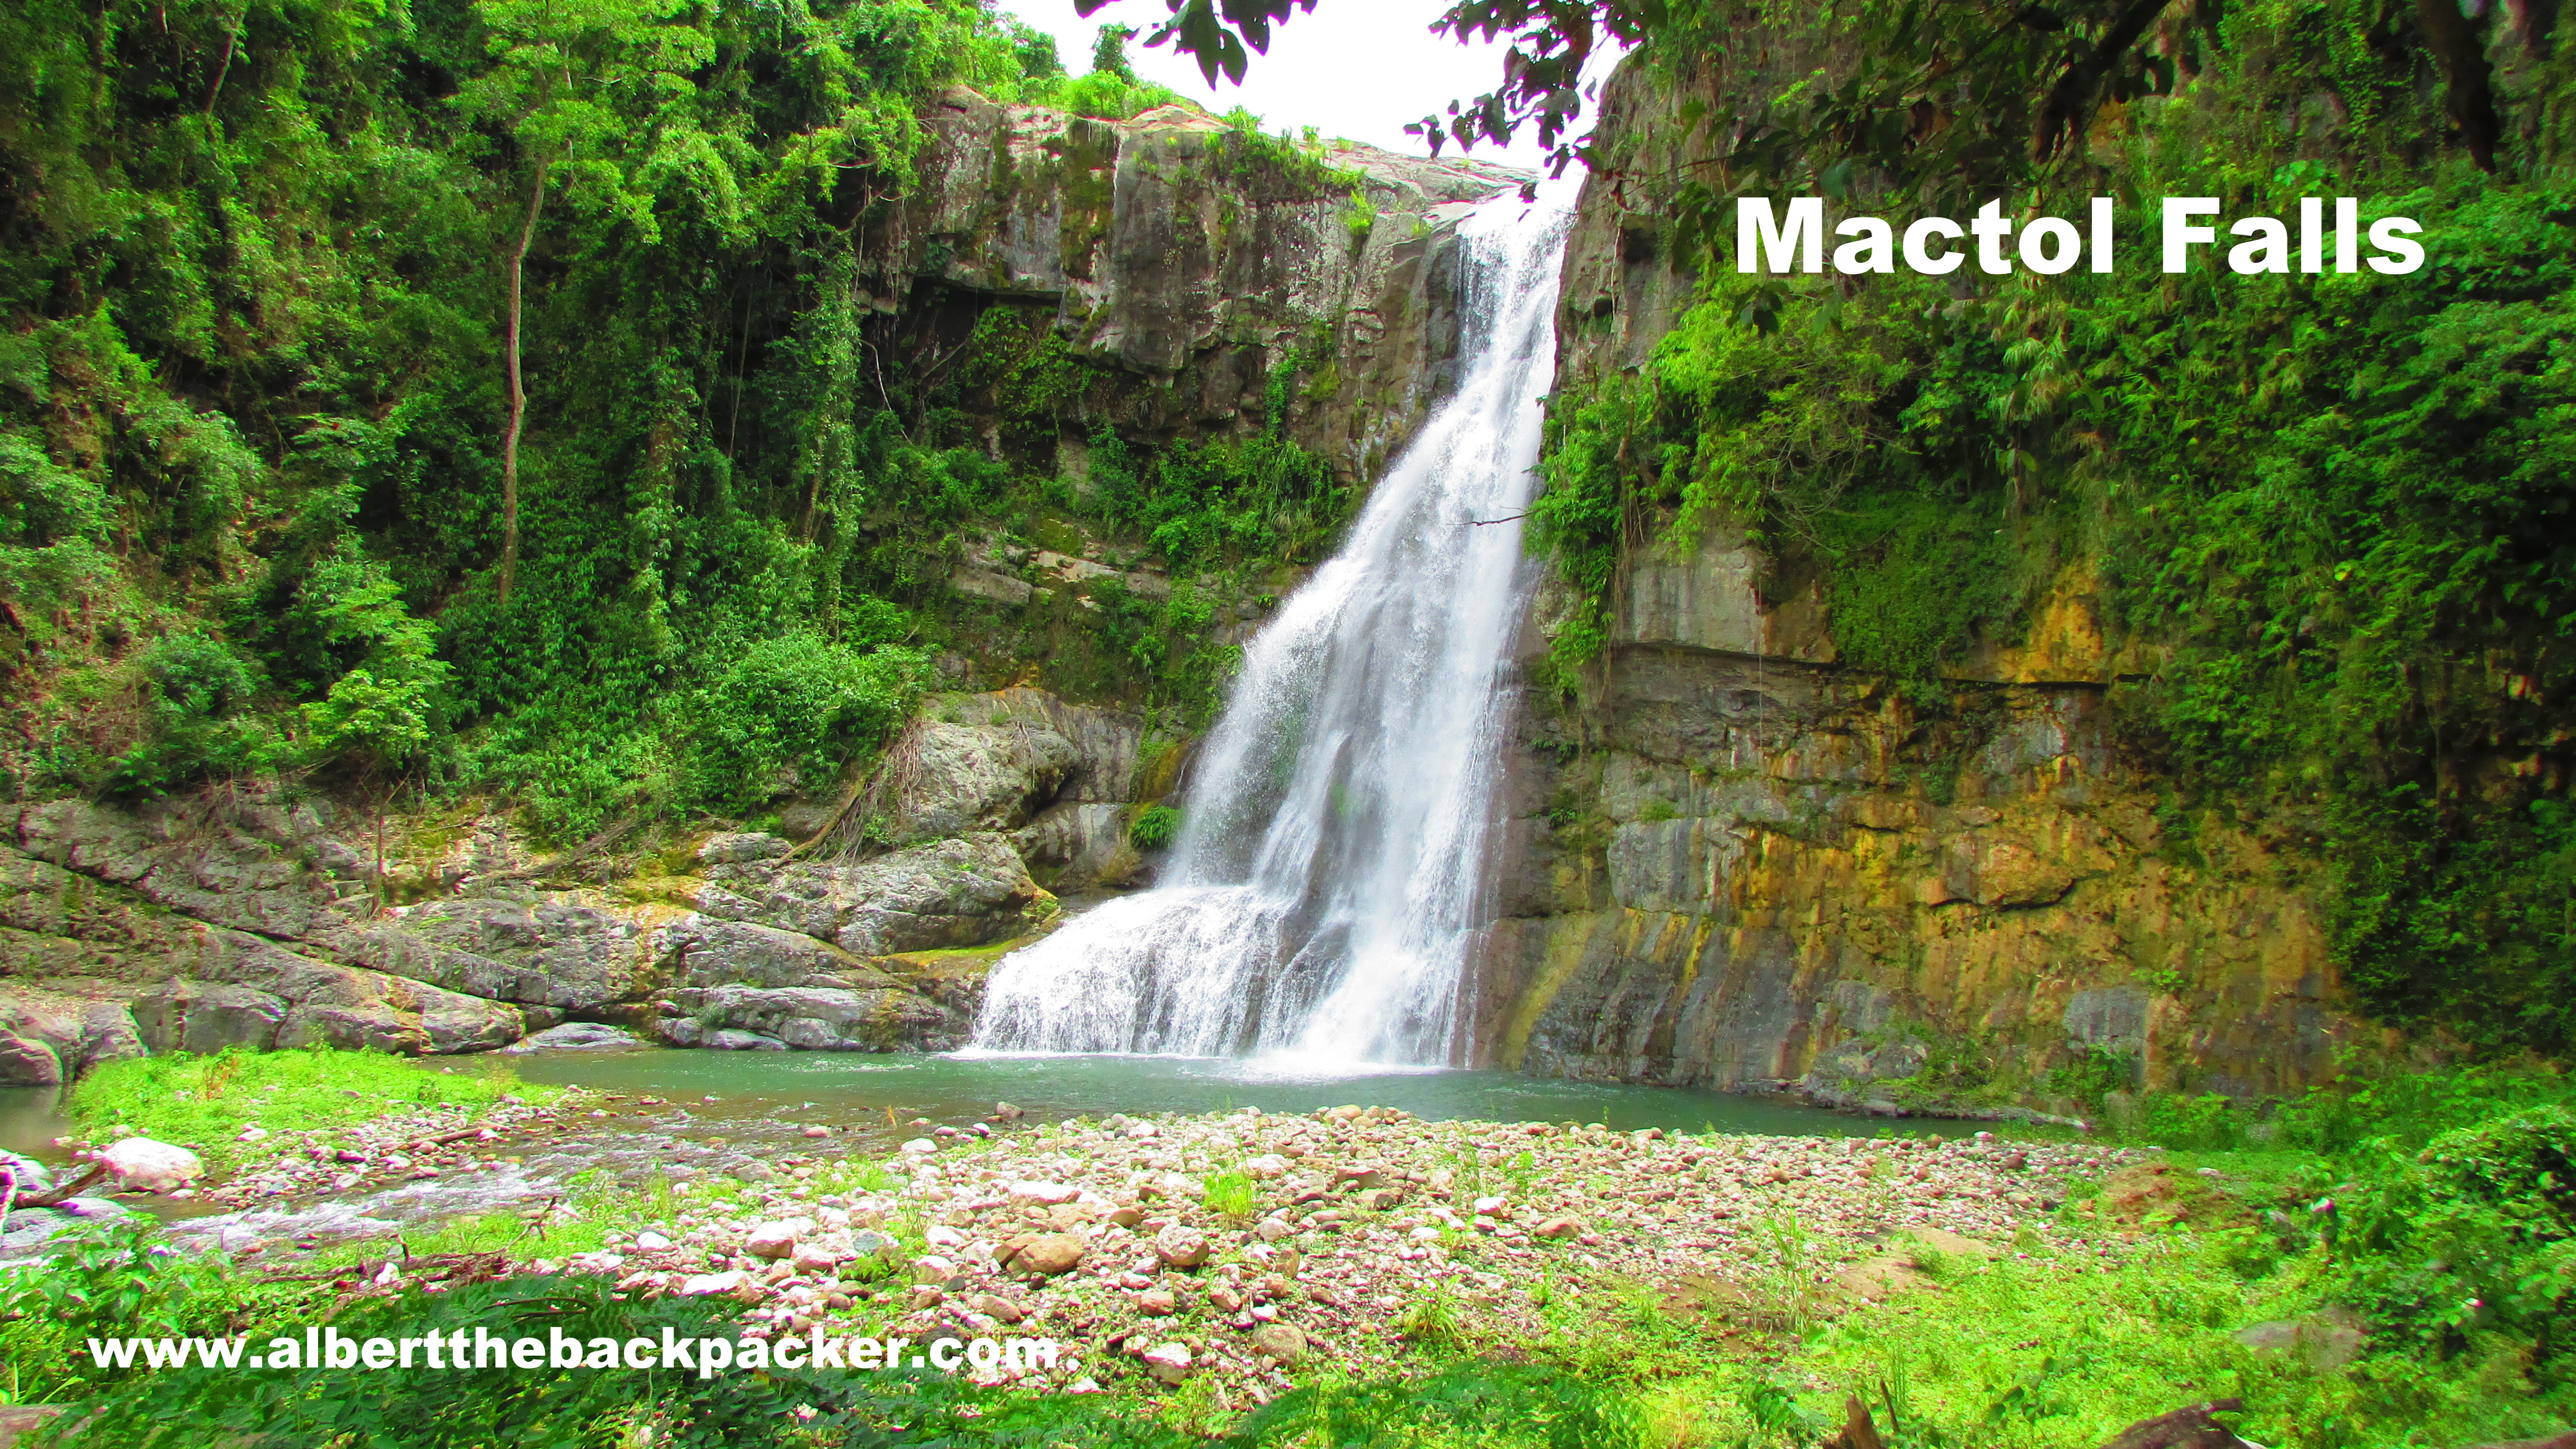 Mactol Falls Image source: www.albertthebackpacker.com